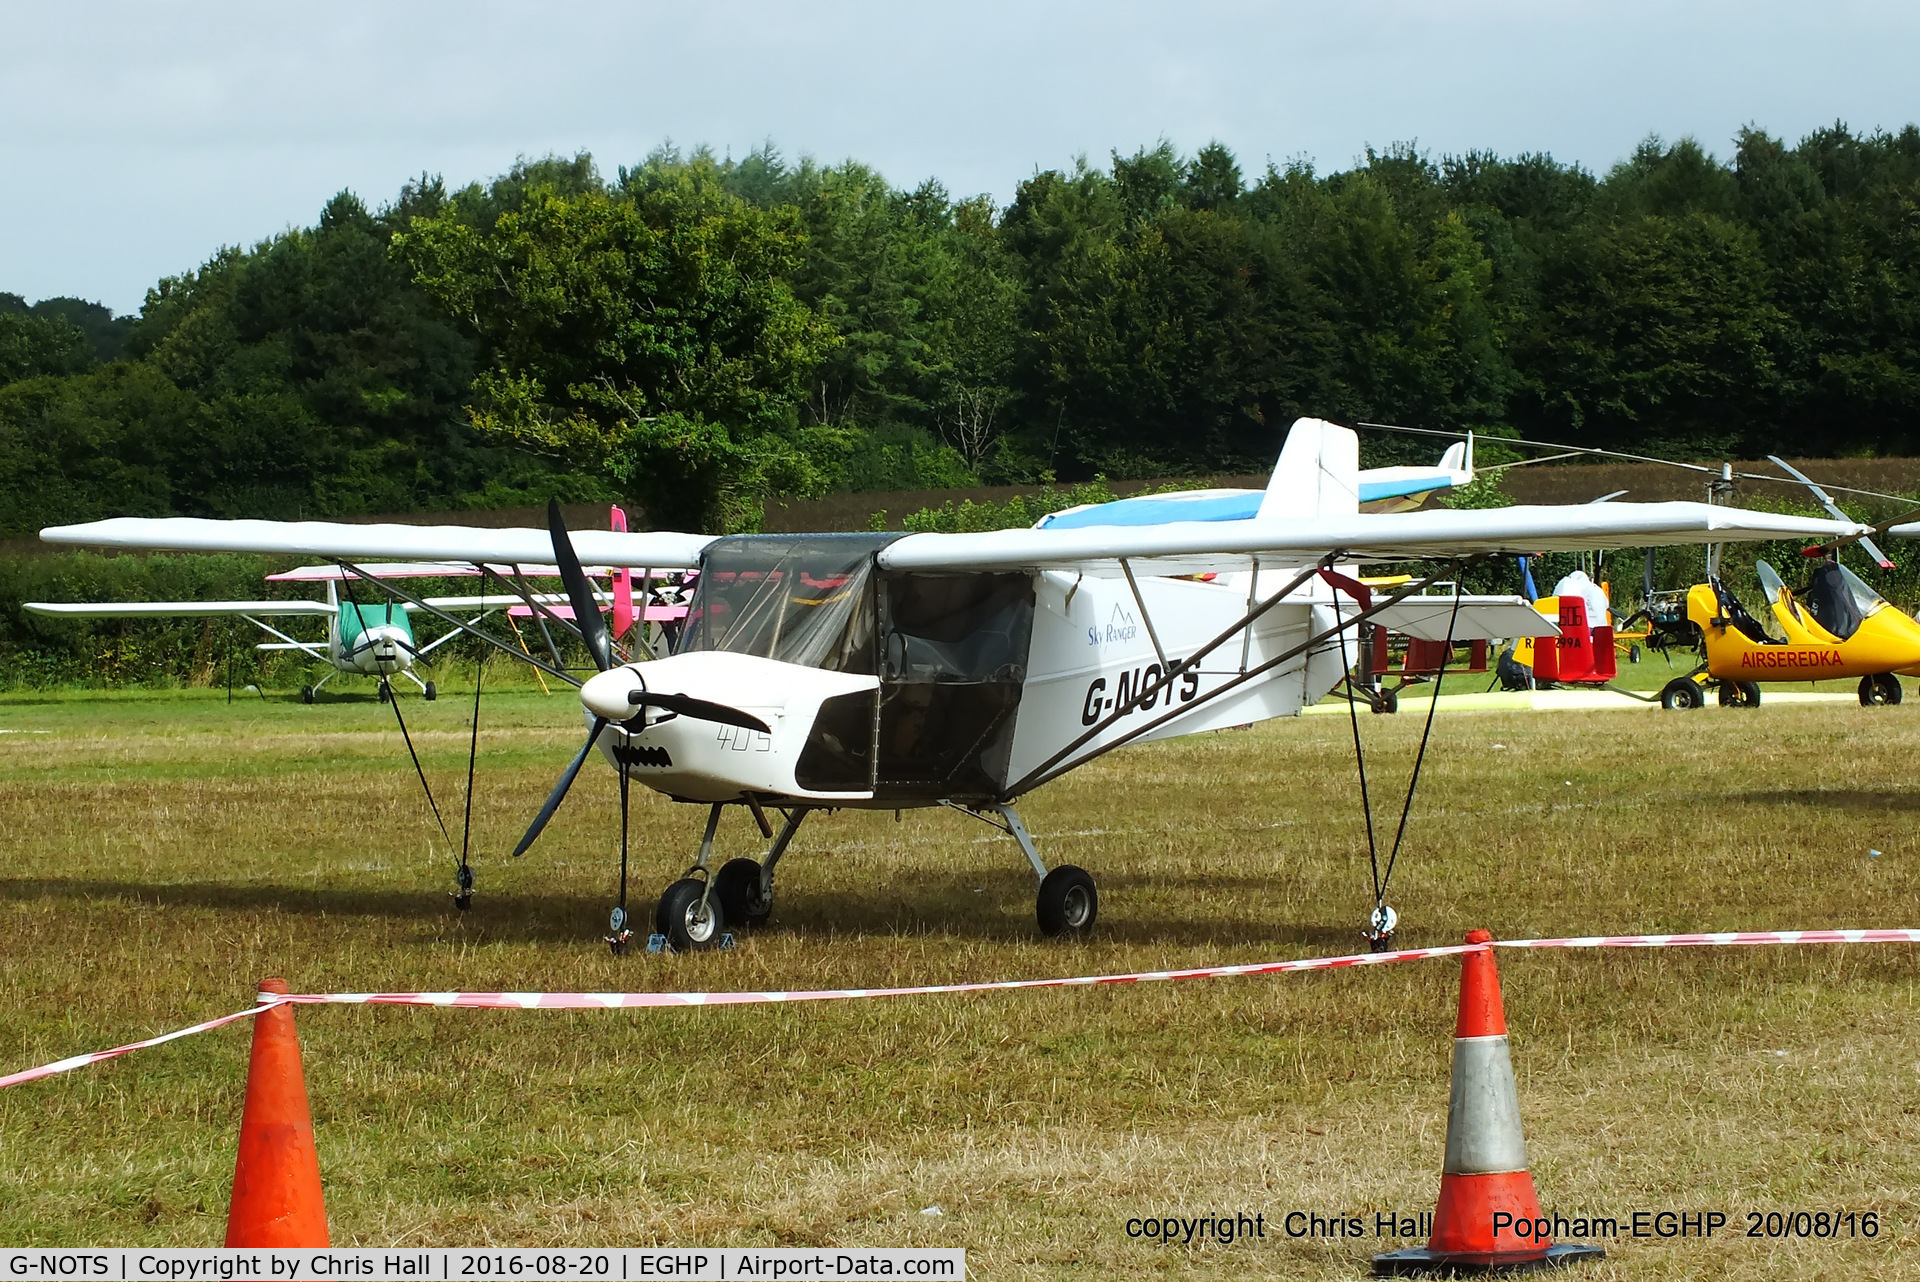 G-NOTS, 2005 Skyranger 912S(1) C/N BMAA/HB/352, at the World Microlight Championships, Popham